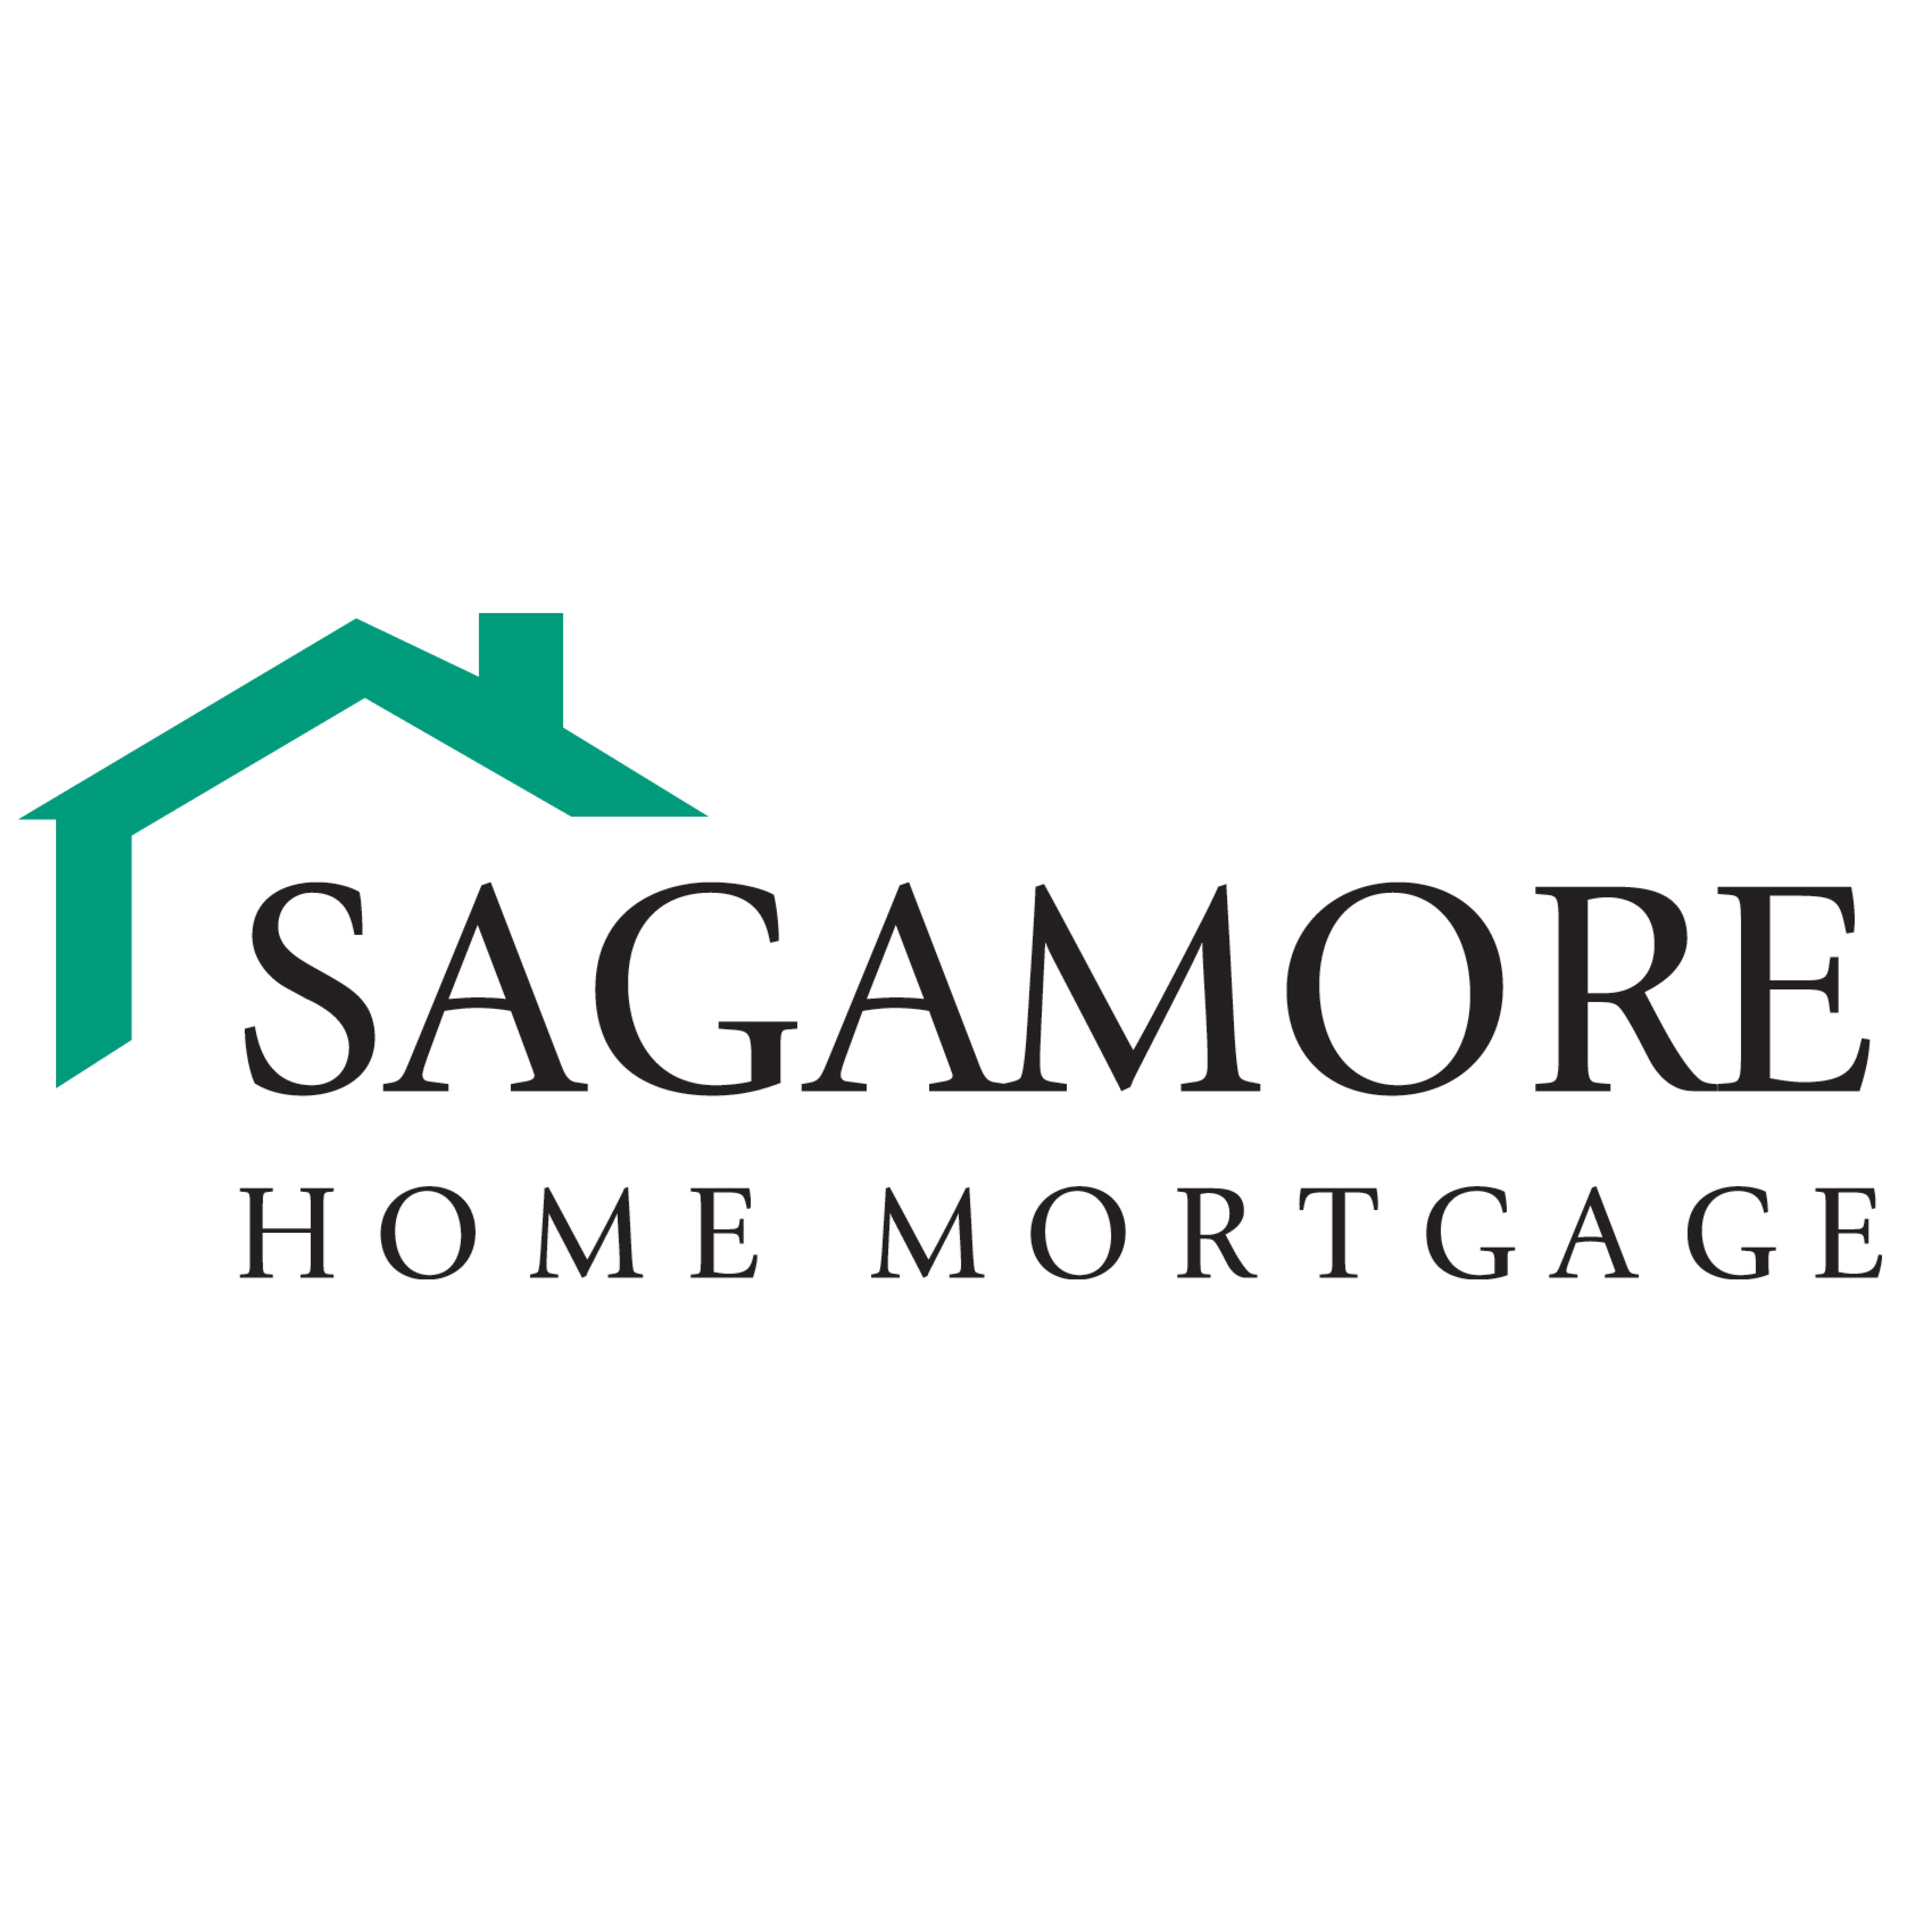 Sagamore Home Mortgage